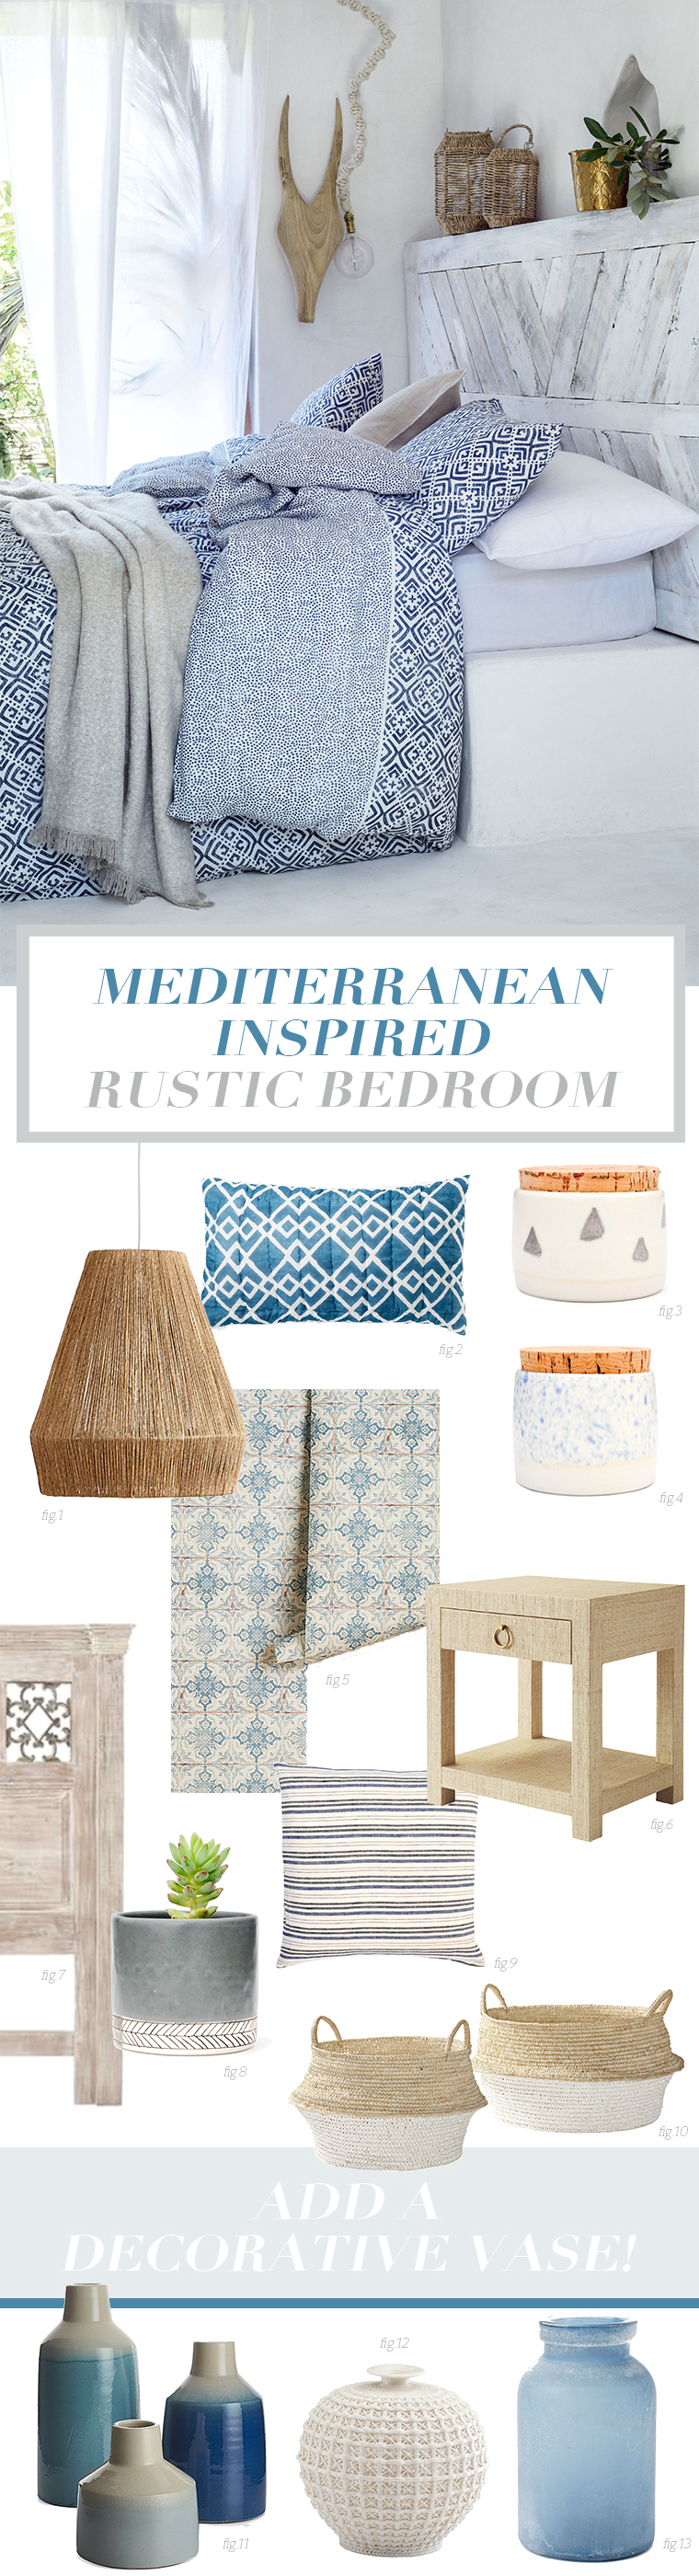 Blue-white-gray-summer-rustic-bedroom-design-inspiration-1